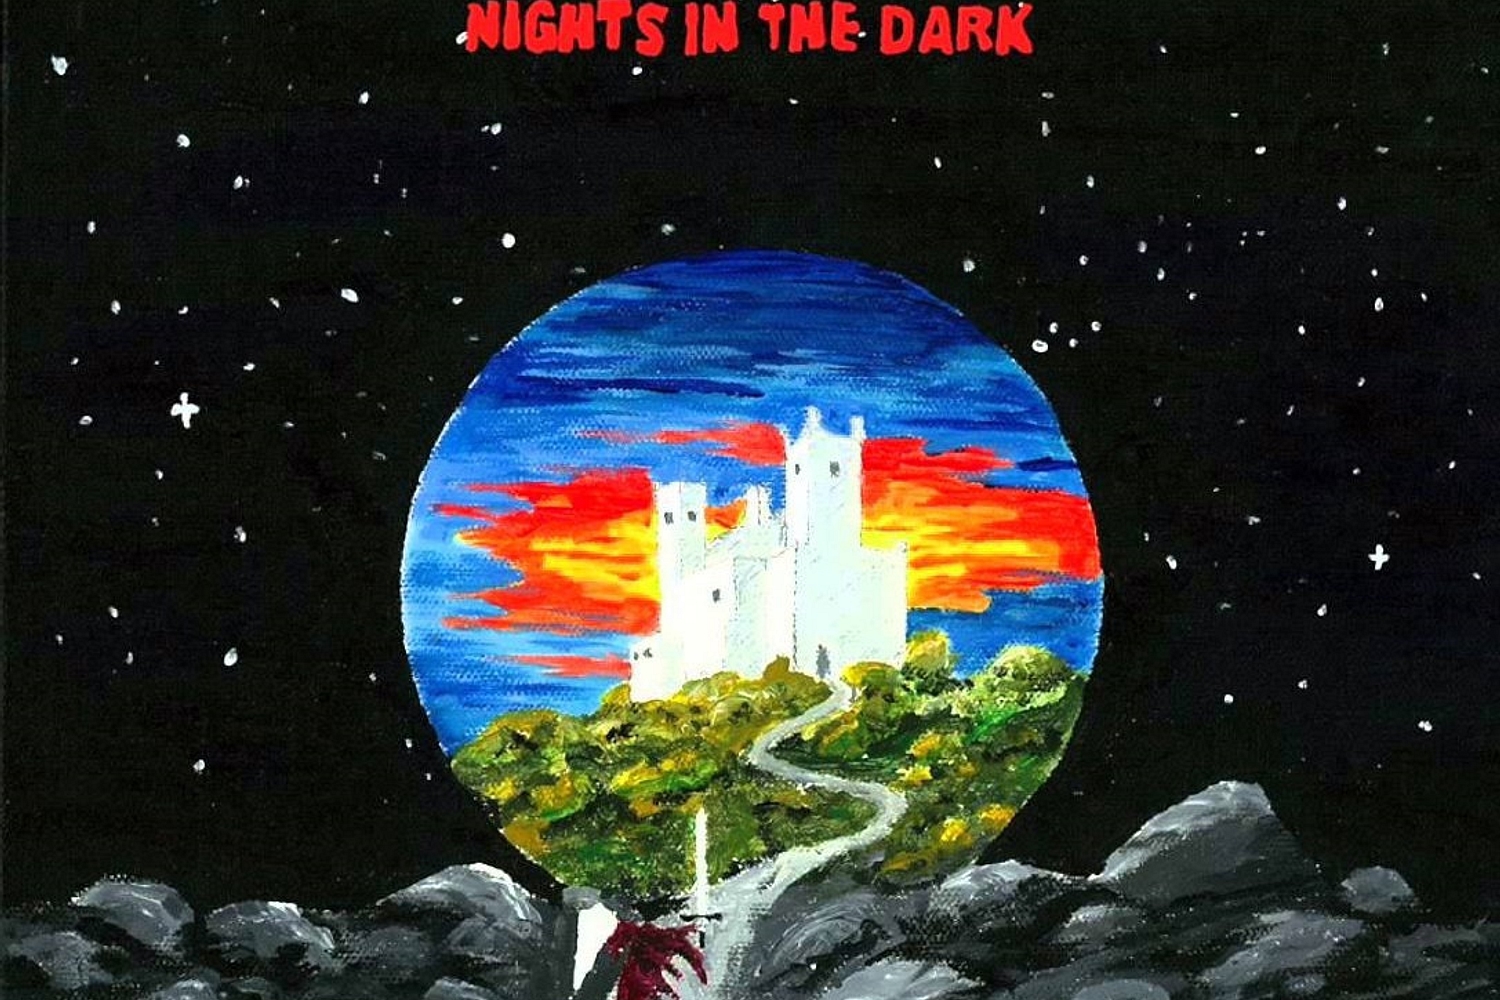 California X - Nights In The Dark